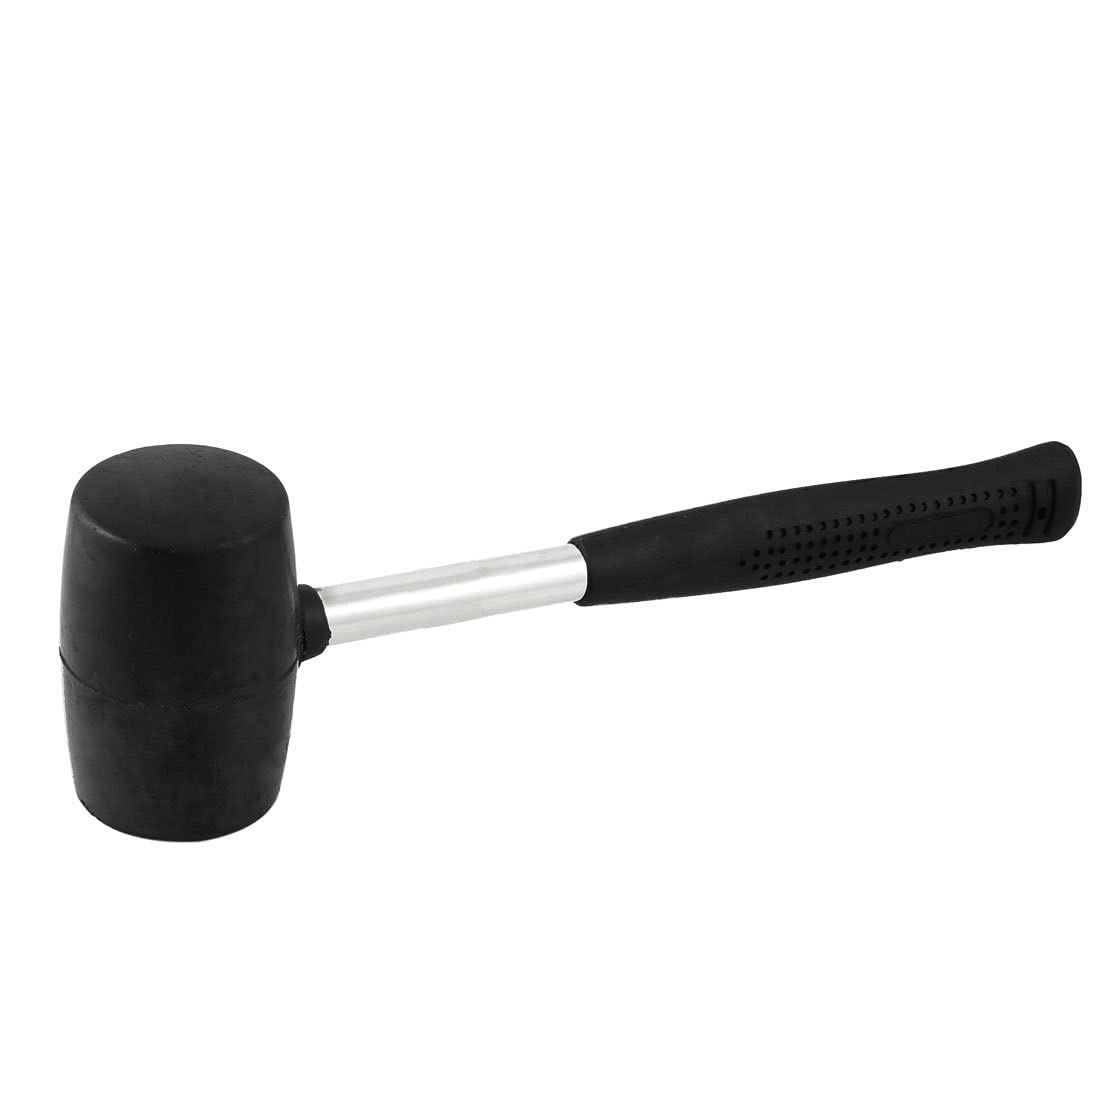 Rubber Mallet - Black | SP Tools 454g / 16oz / 1lbs